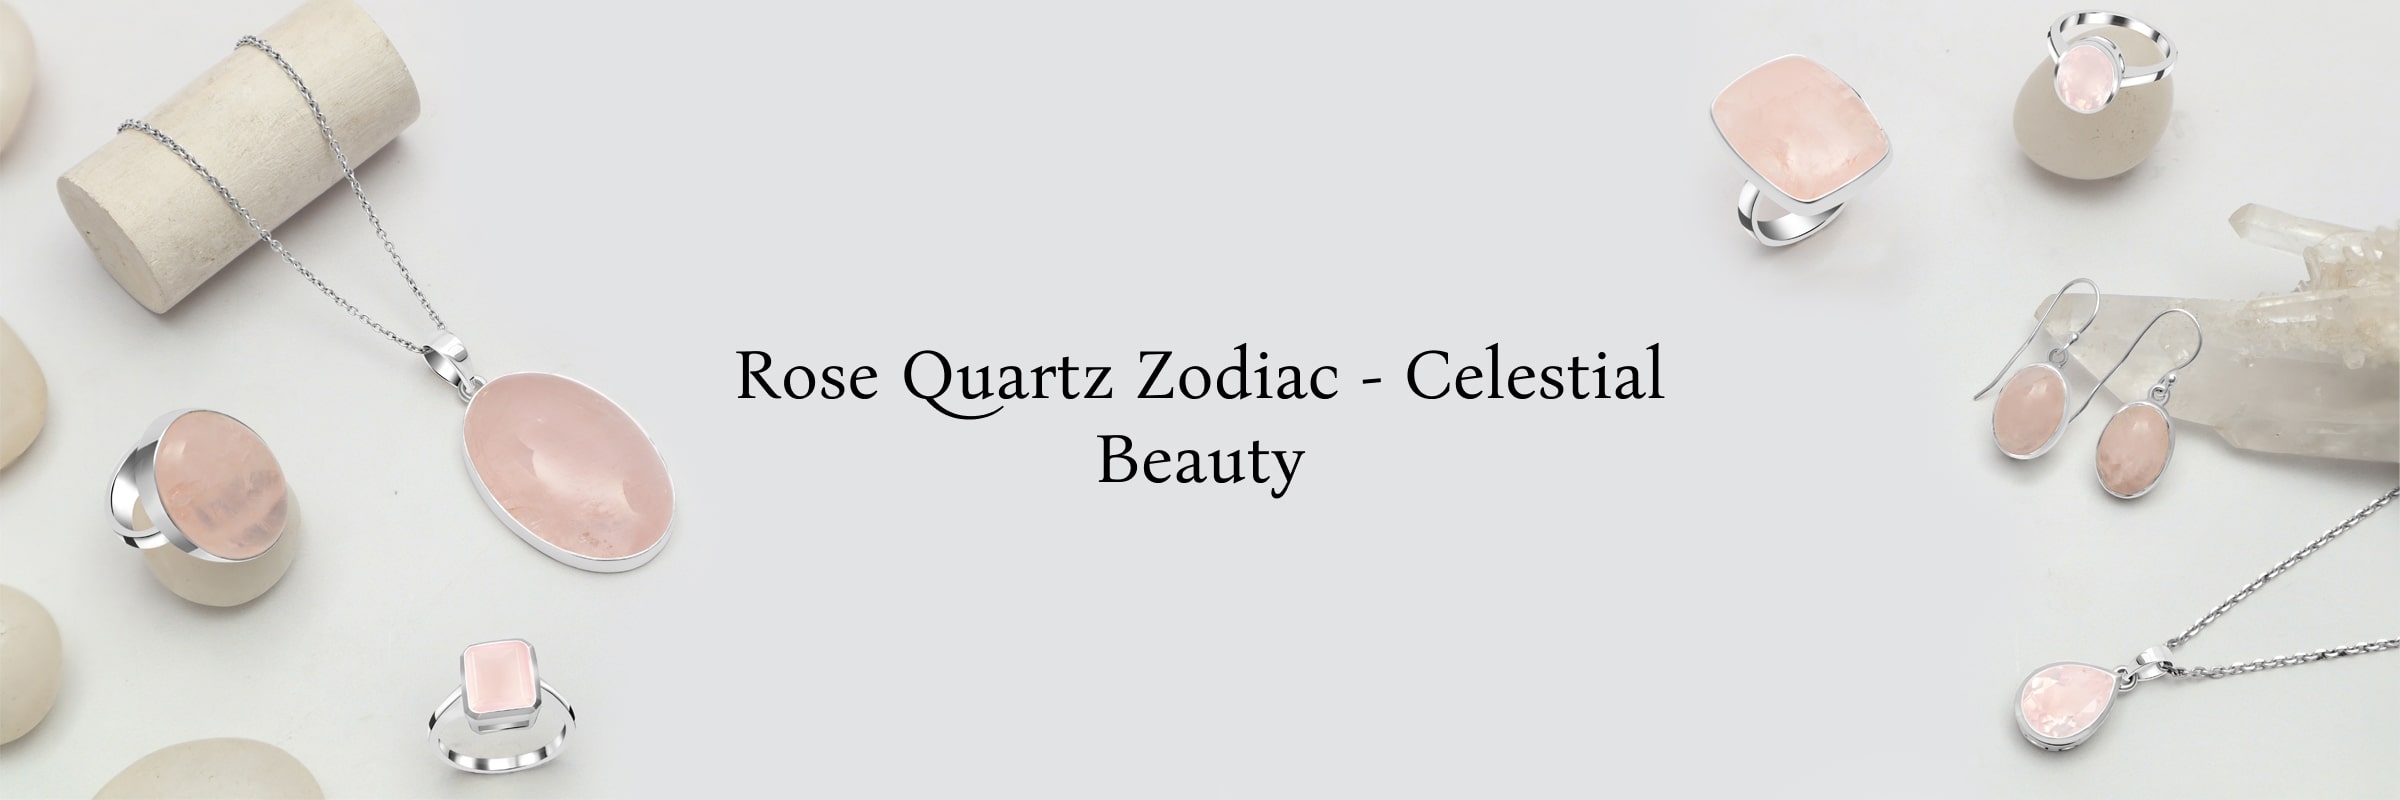 Rose Quartz Zodiac sign